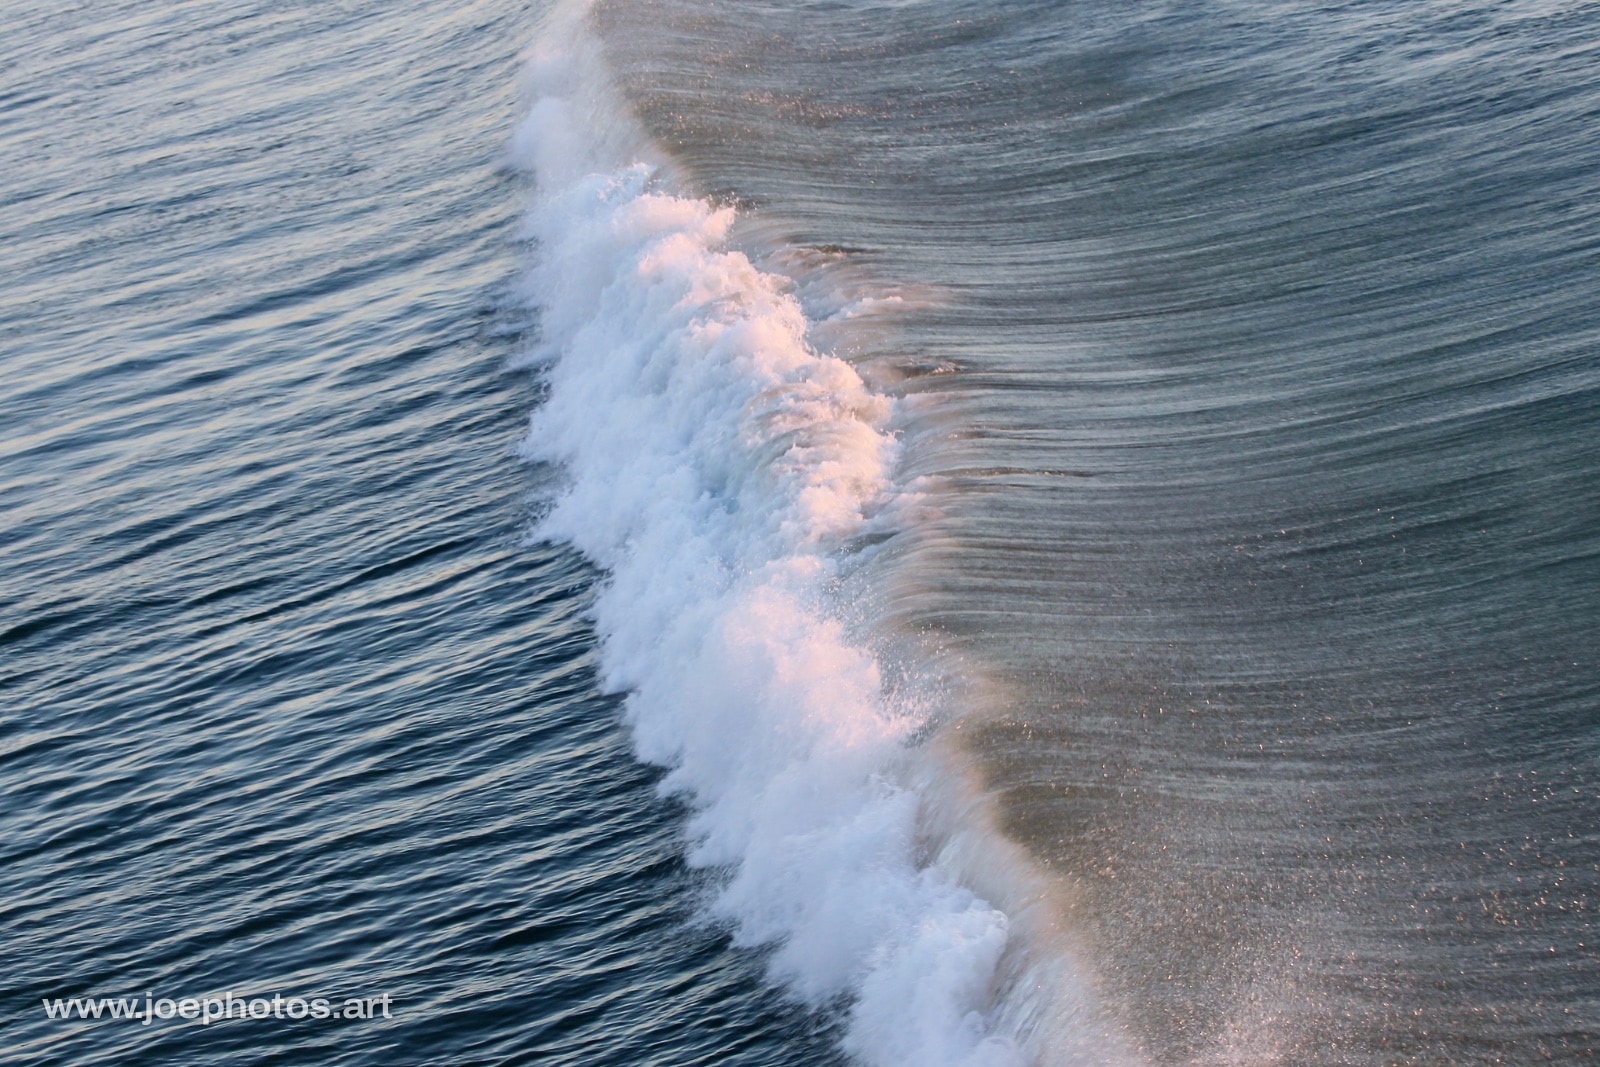 Crashing sculpted ocean waves at sunrise.